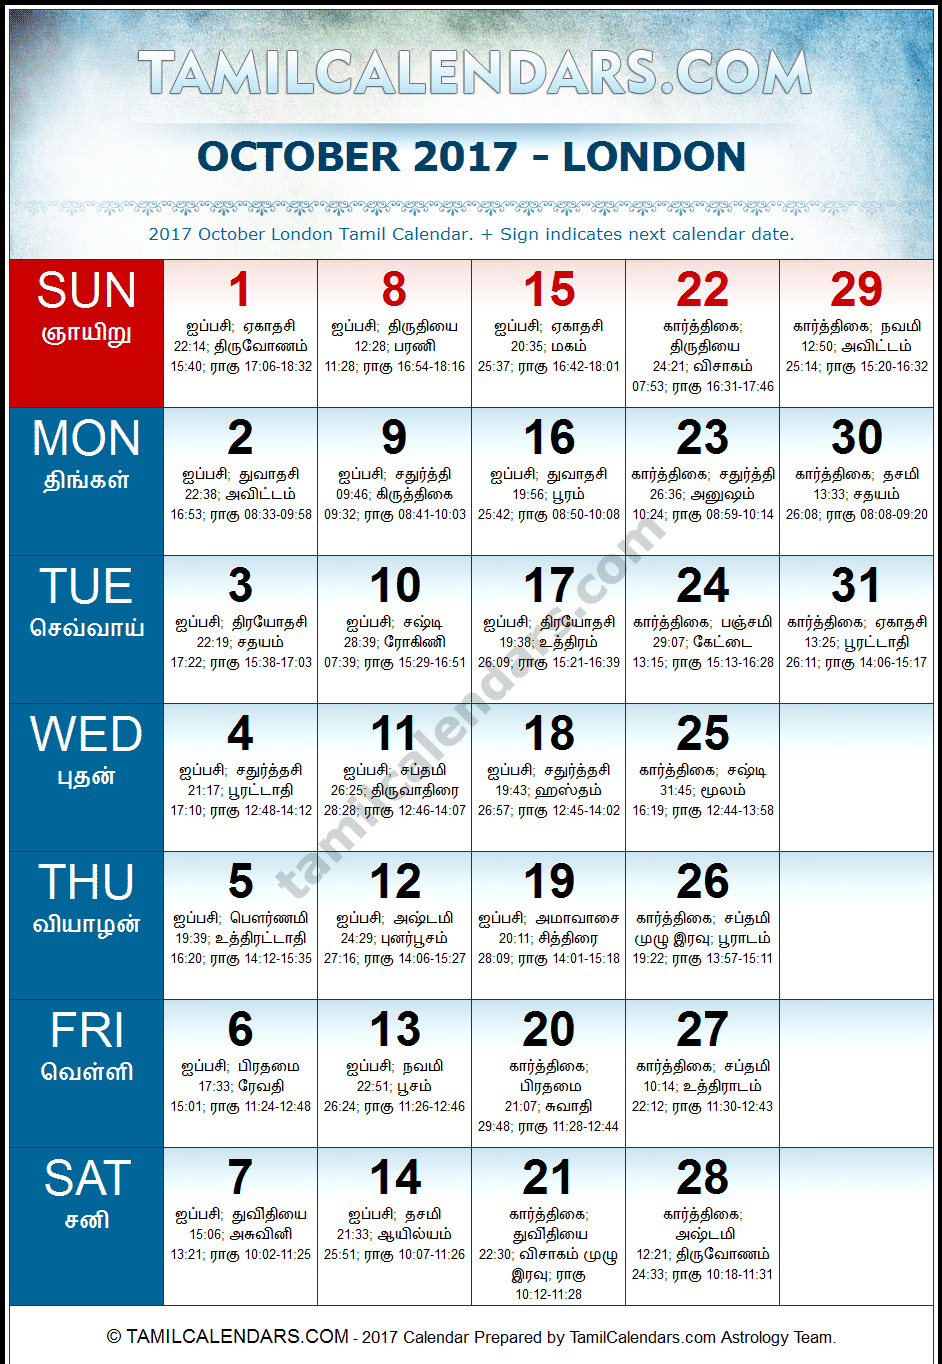 October 2017 Tamil Calendar for London, UK